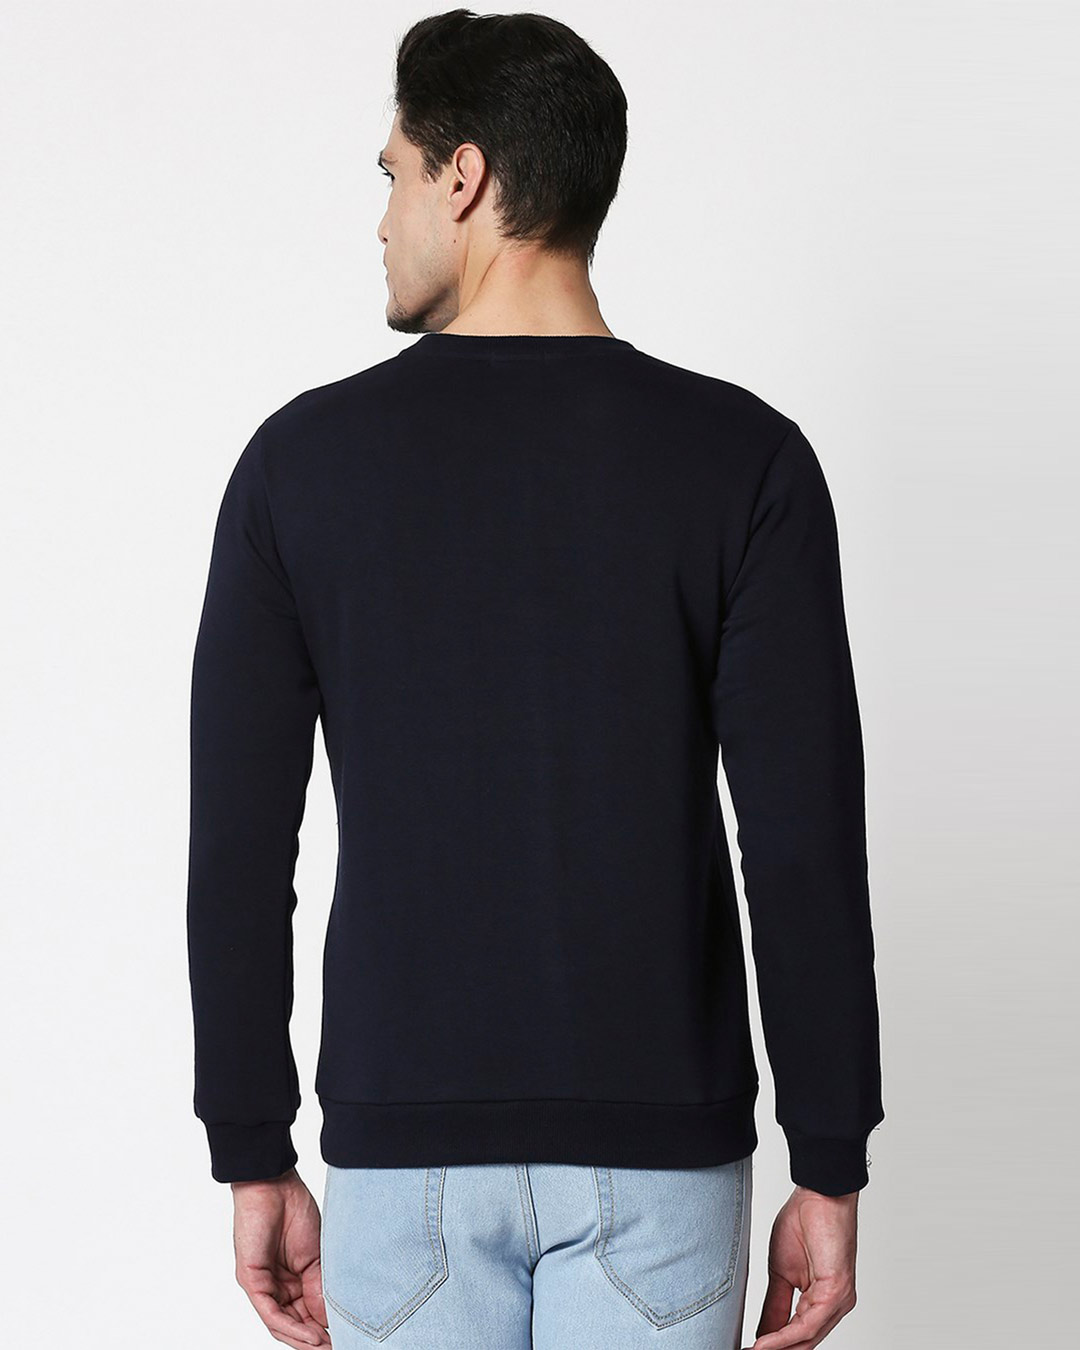 Shop Smart Is The New Cool Fleece Sweatshirt Navy Blue-Back